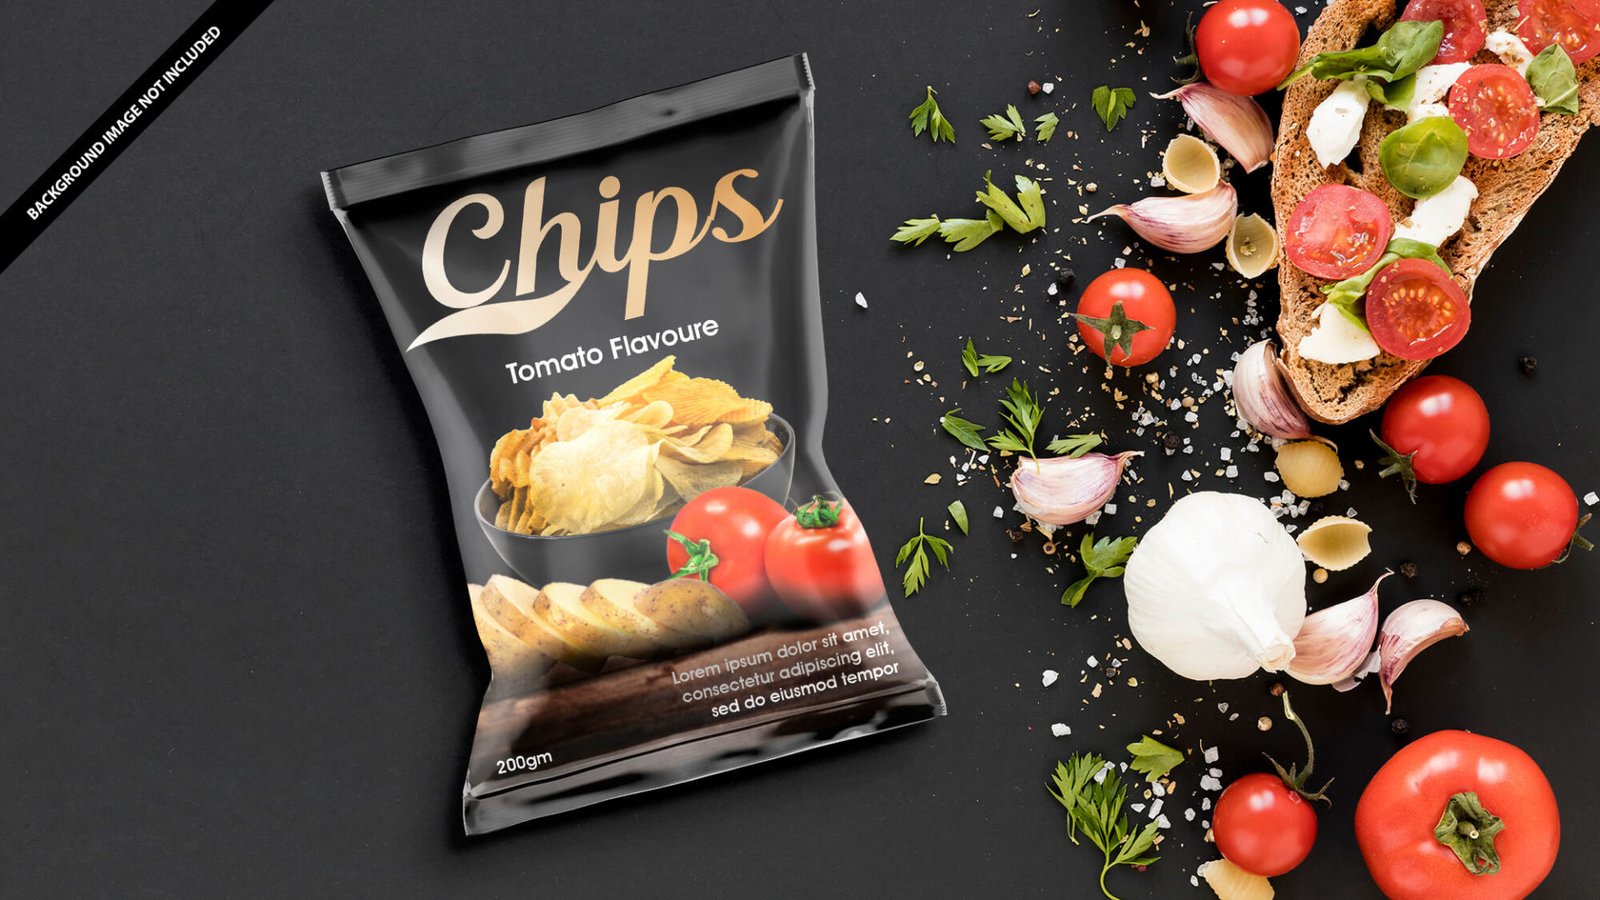 Free Tomato Chips Packet Mockup PSD Template | Mockup Den